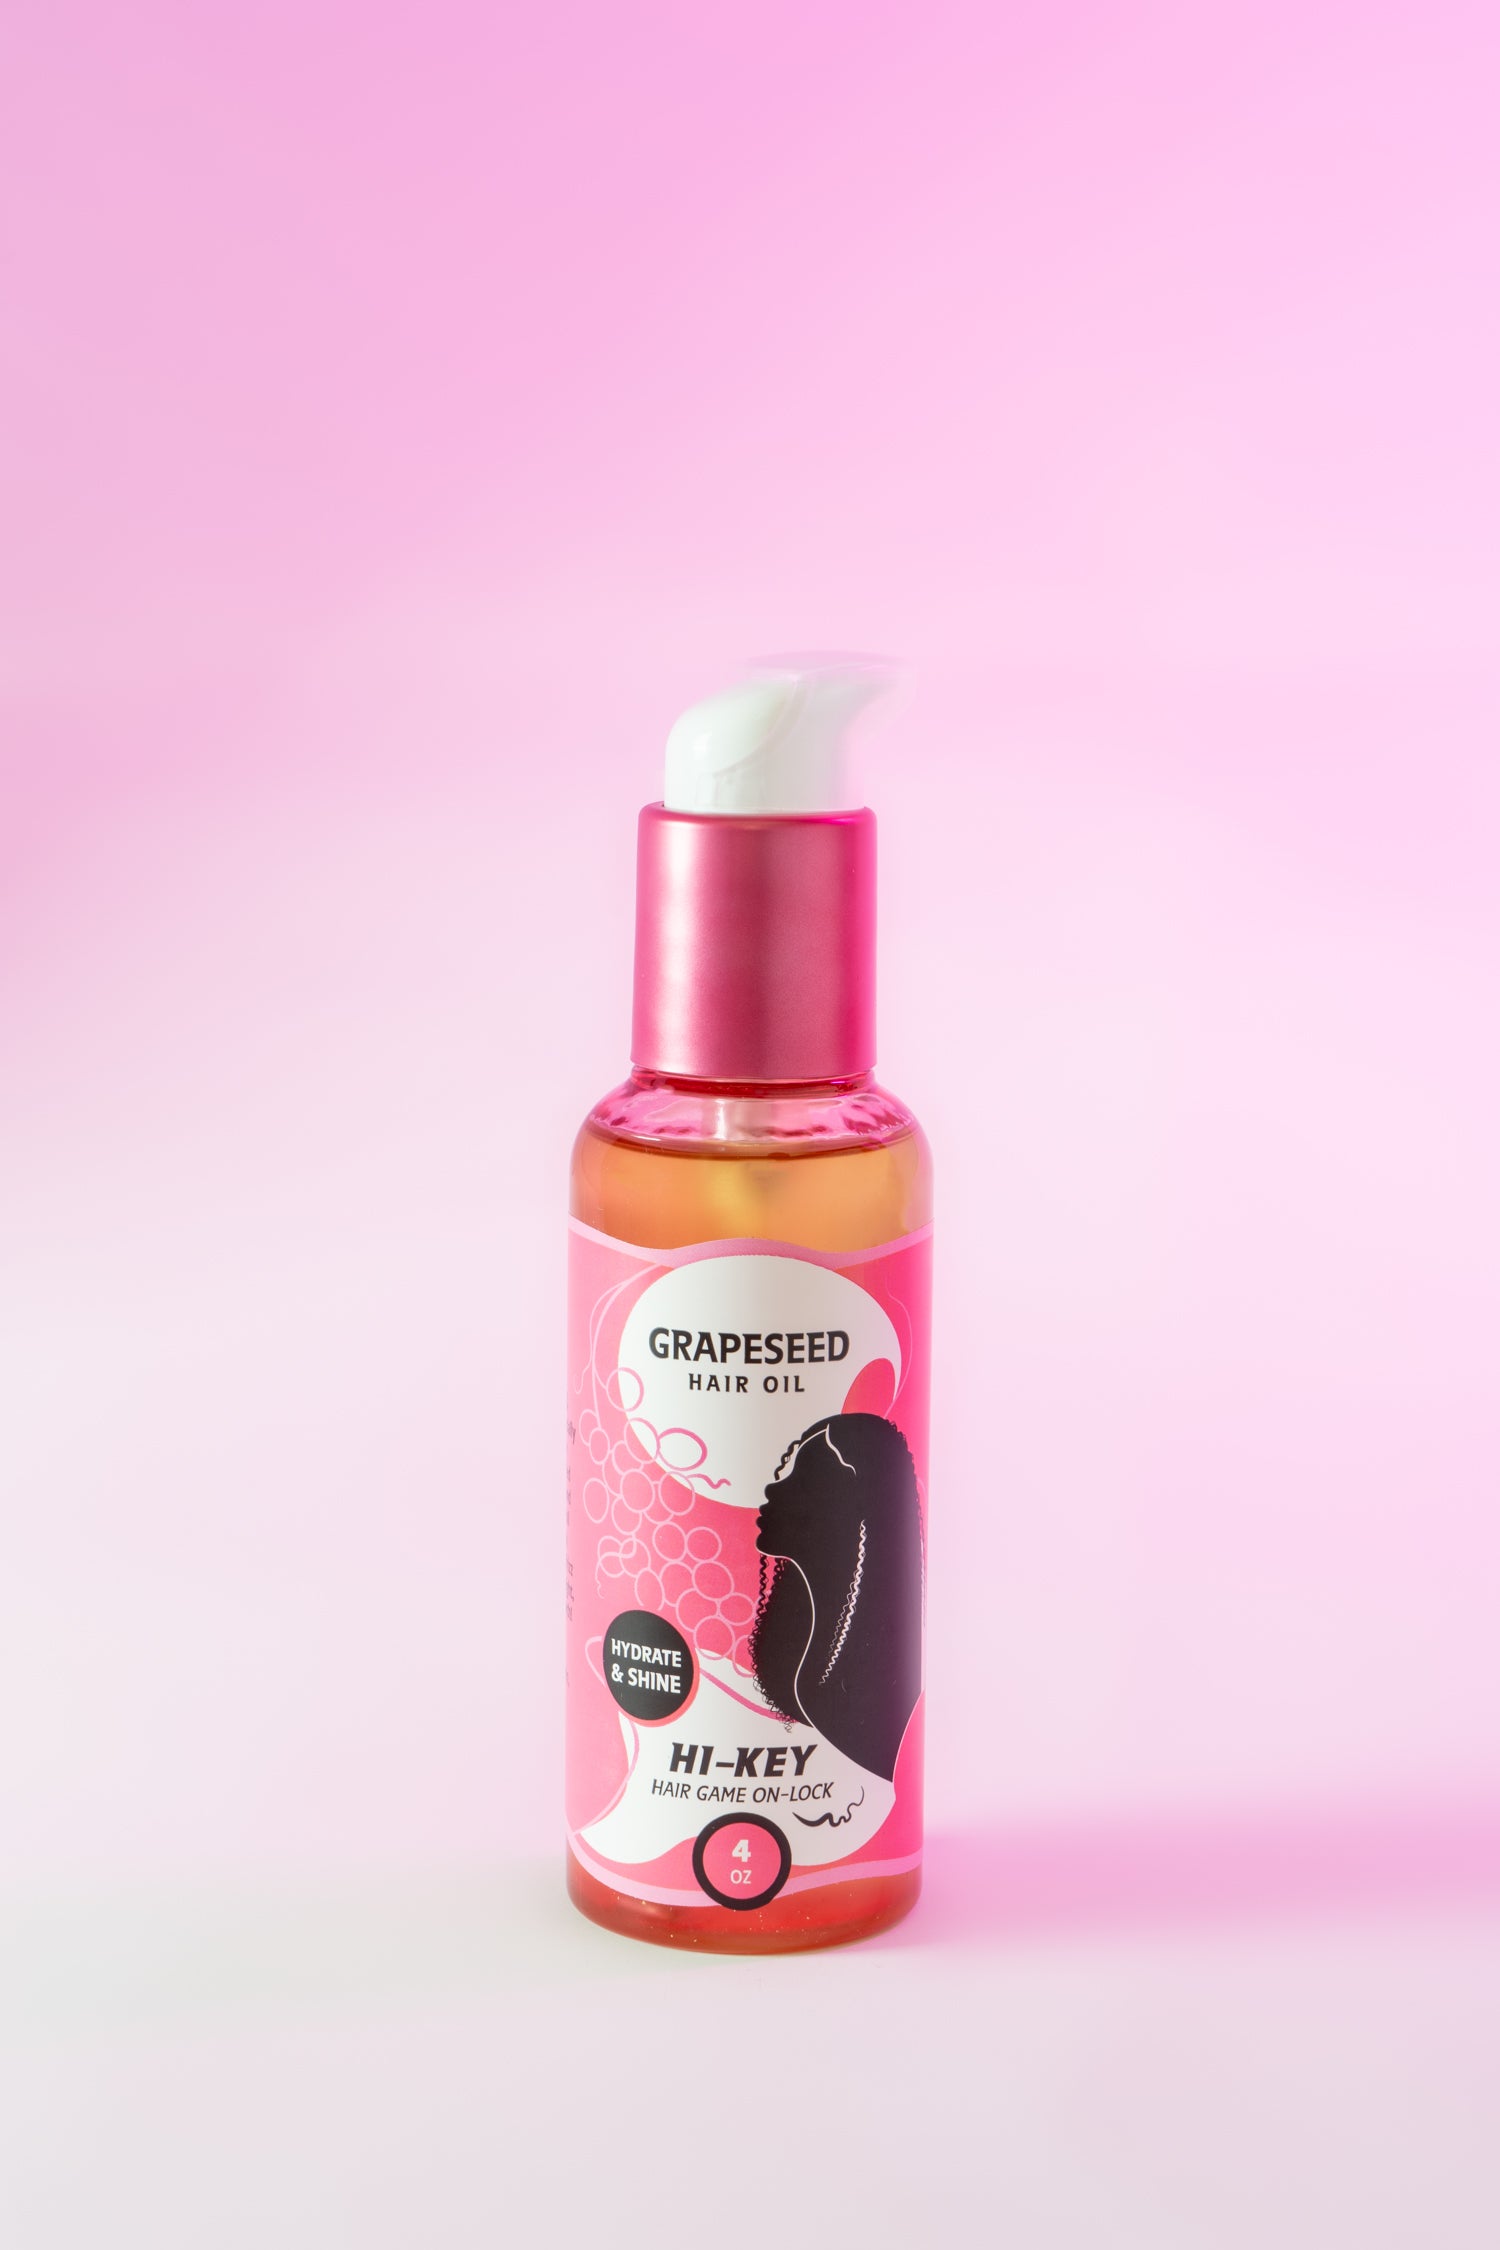 Hi-Key Grapeseed Hair Oil 4 oz